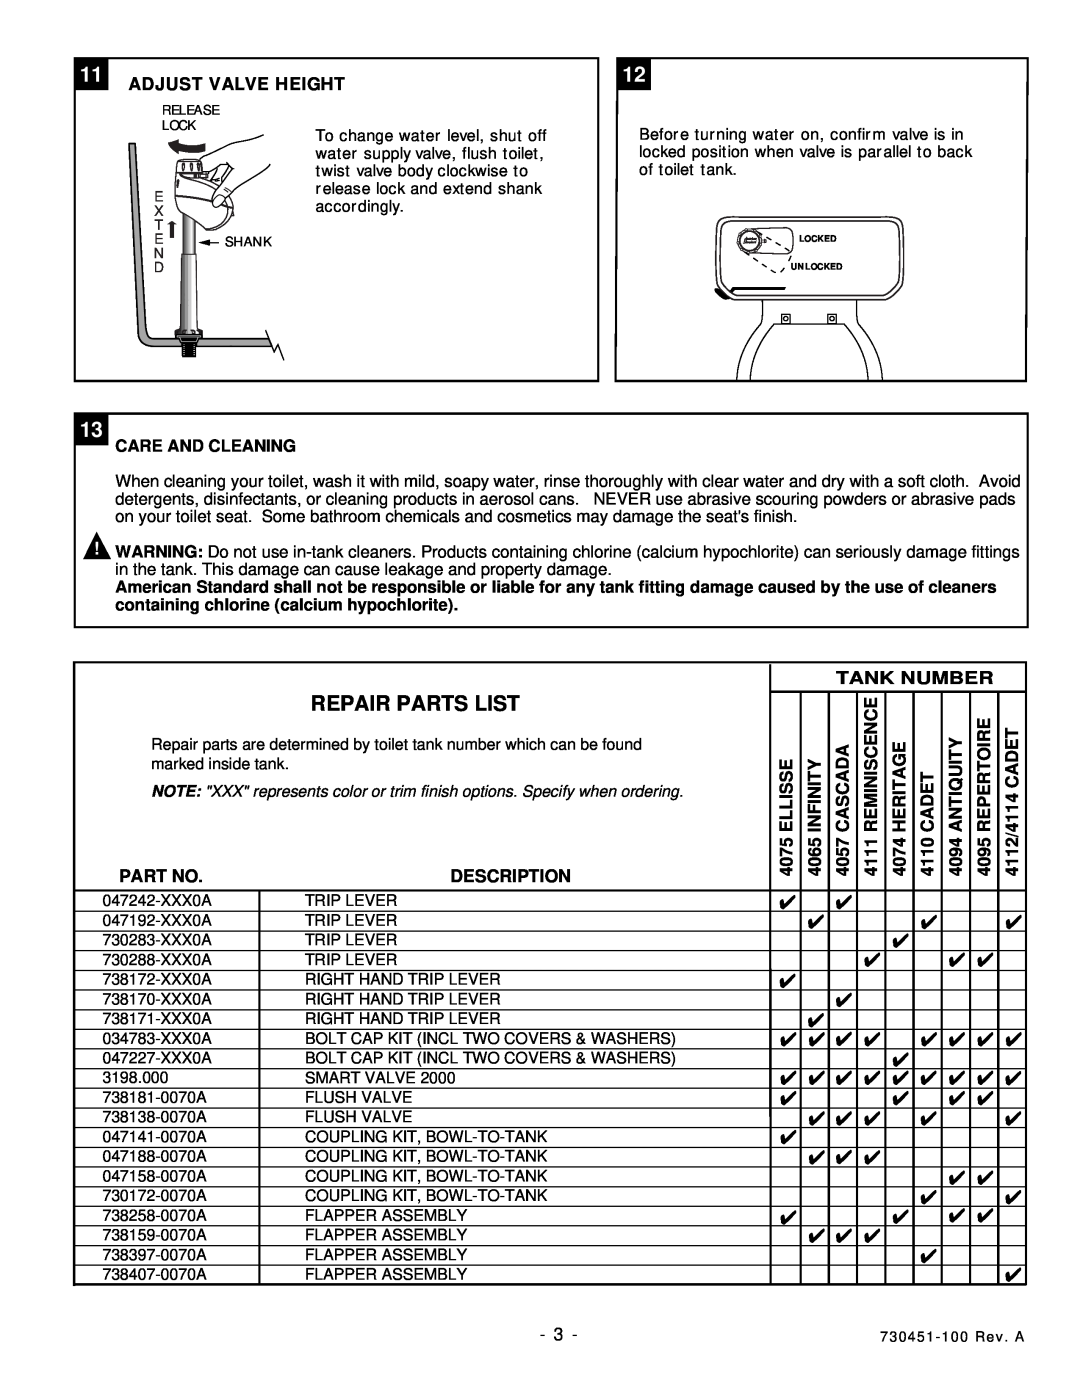 American Standard 2262, 2316, 2319, 2280 installation instructions Repair Parts List, 11ADJUST VALVE HEIGHT 